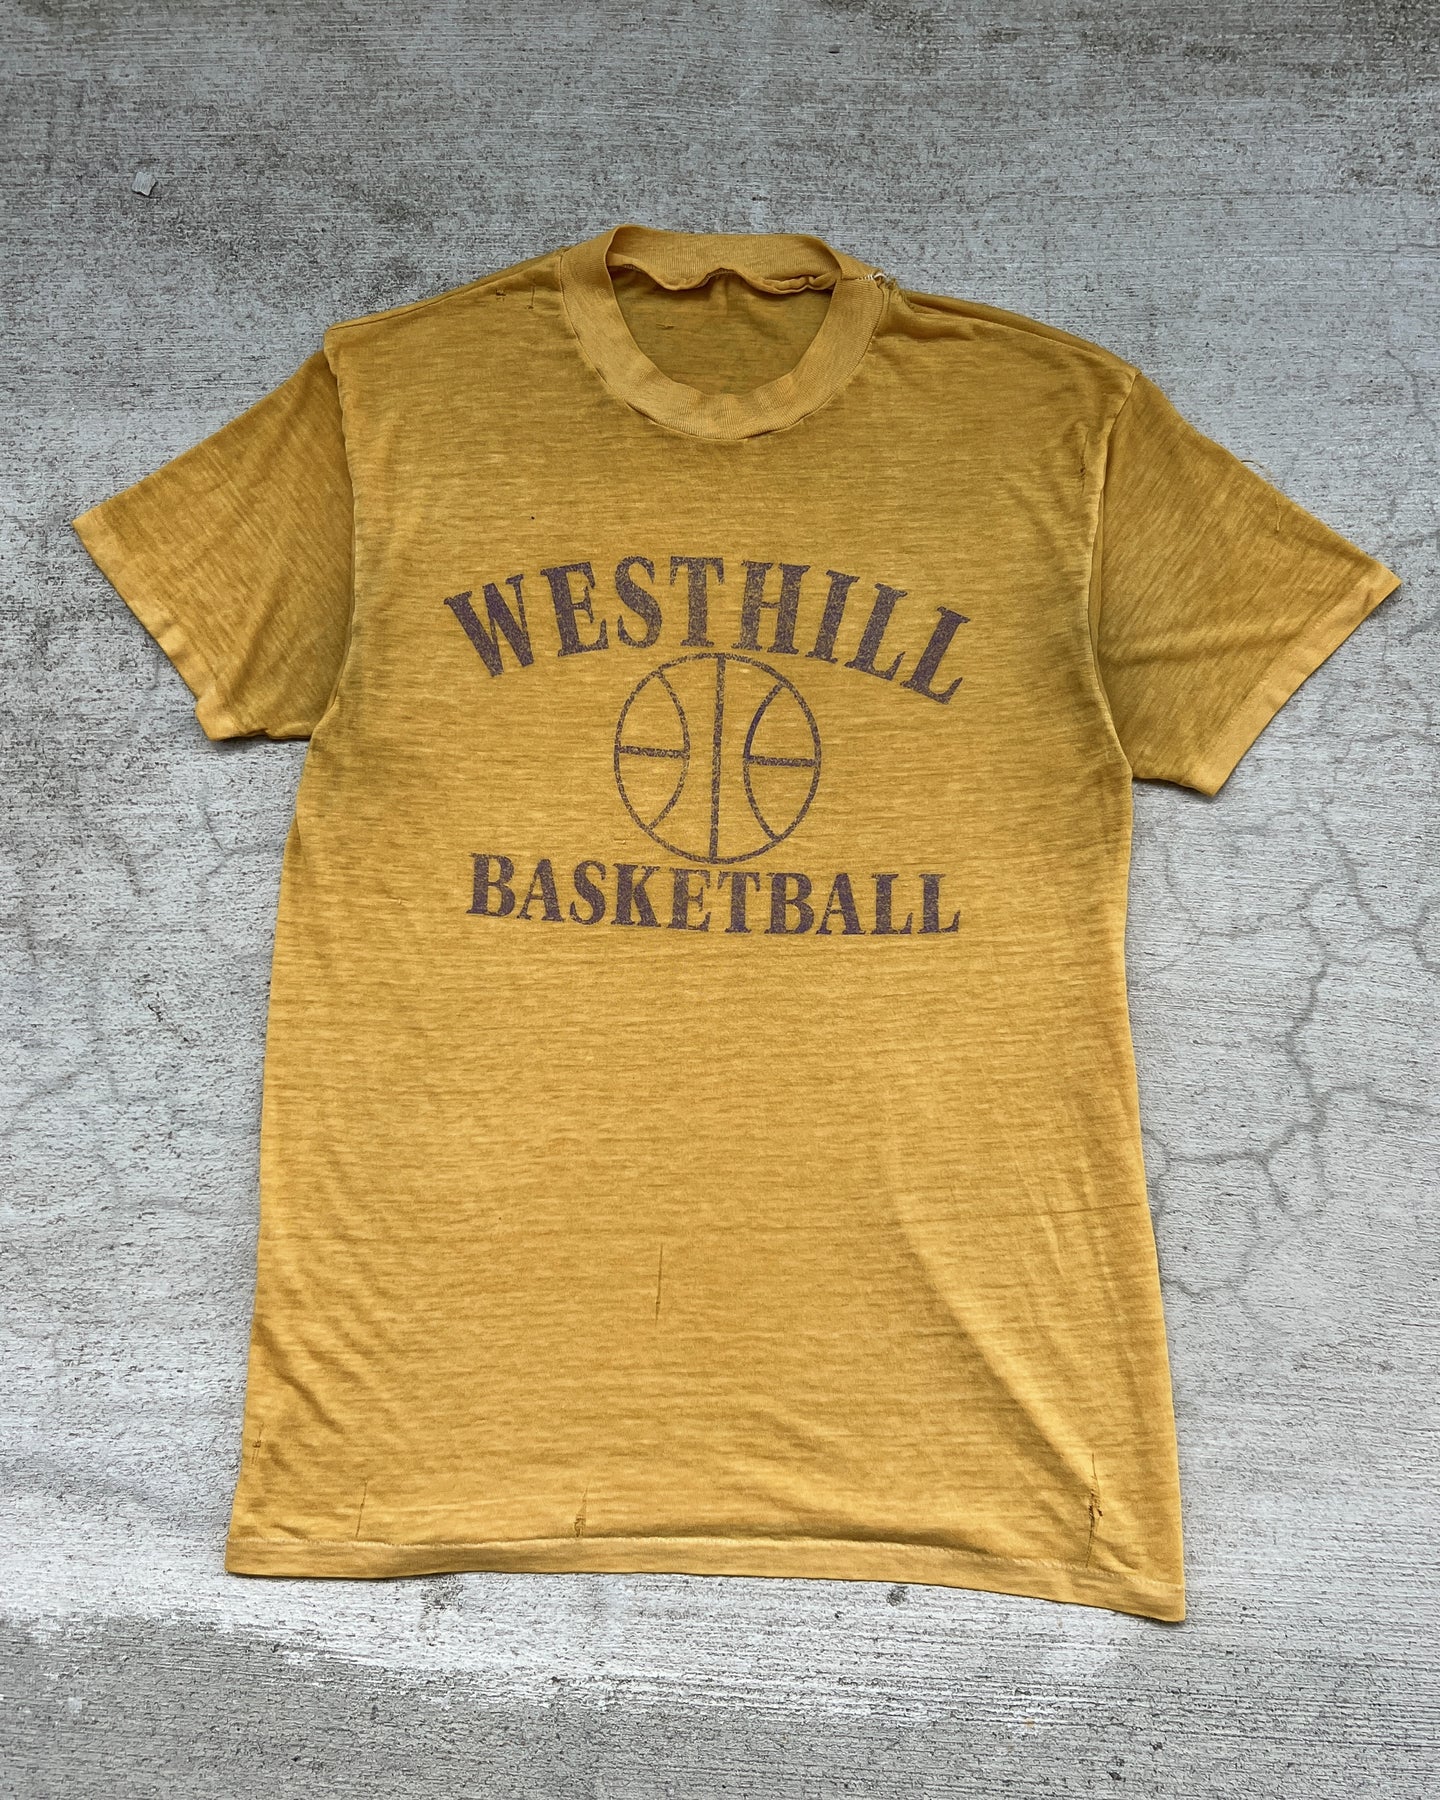 1980s Westhill Basketball Paper Thin Single Stitch Tee - Medium